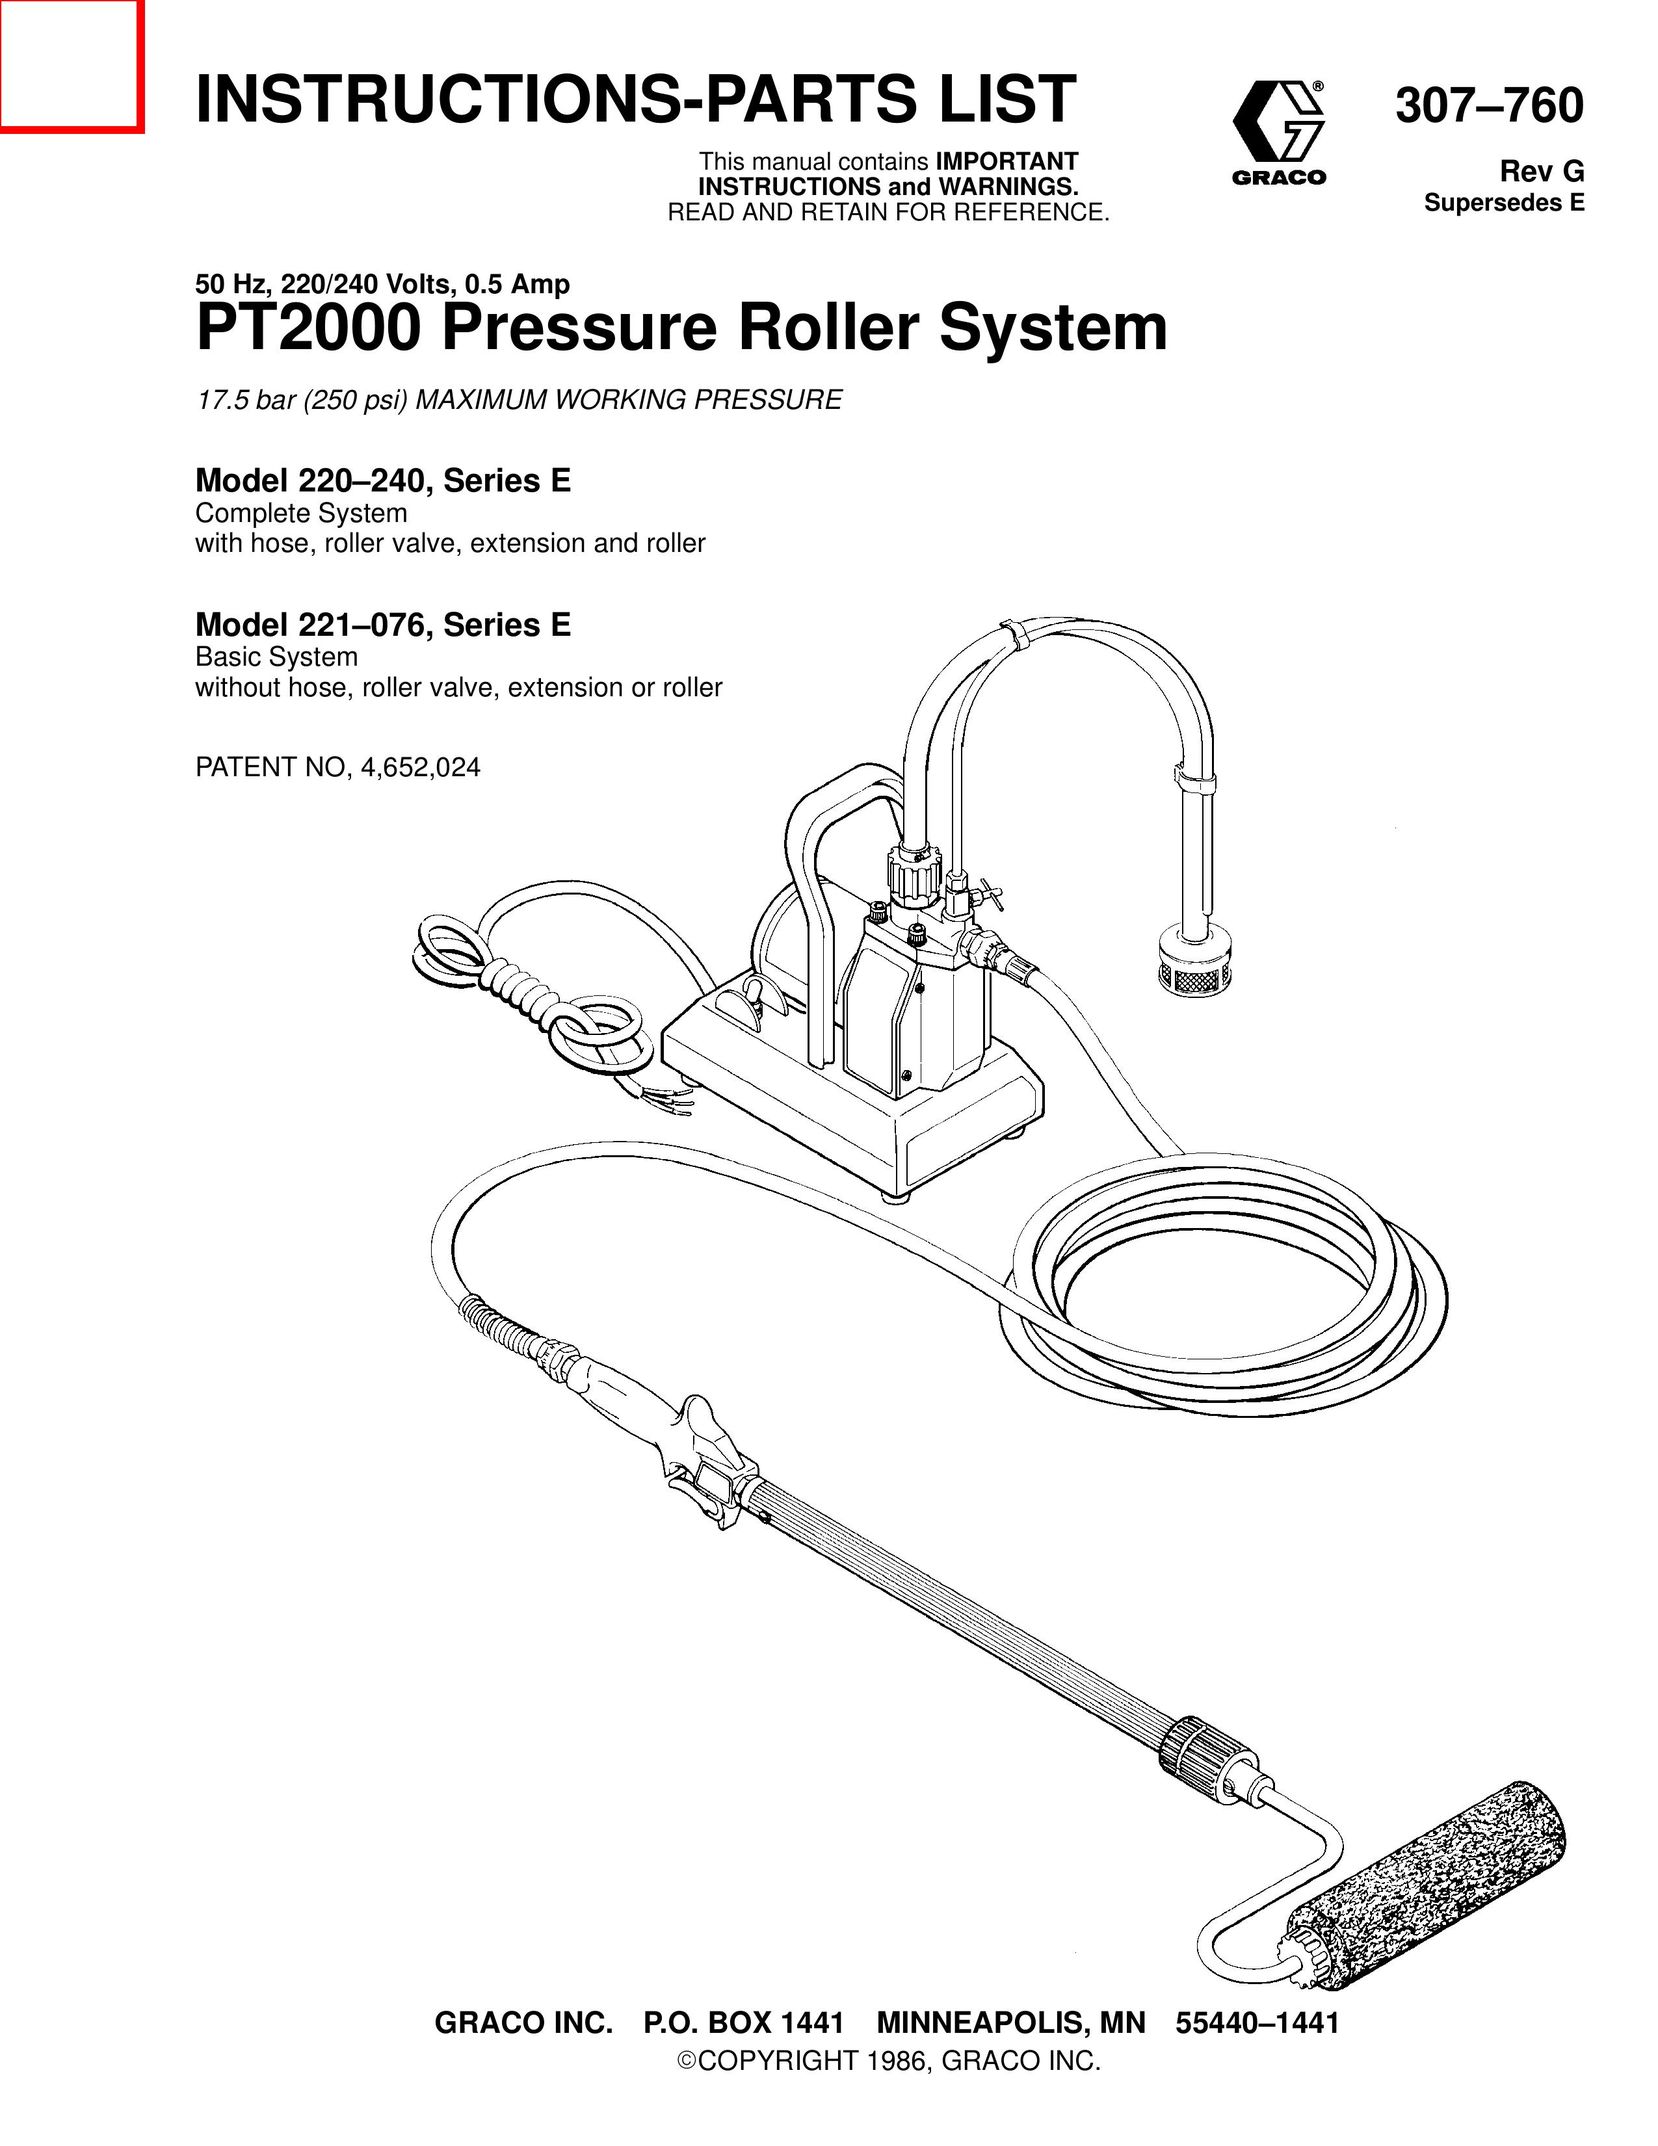 Graco Inc. 307760 Power Roller User Manual